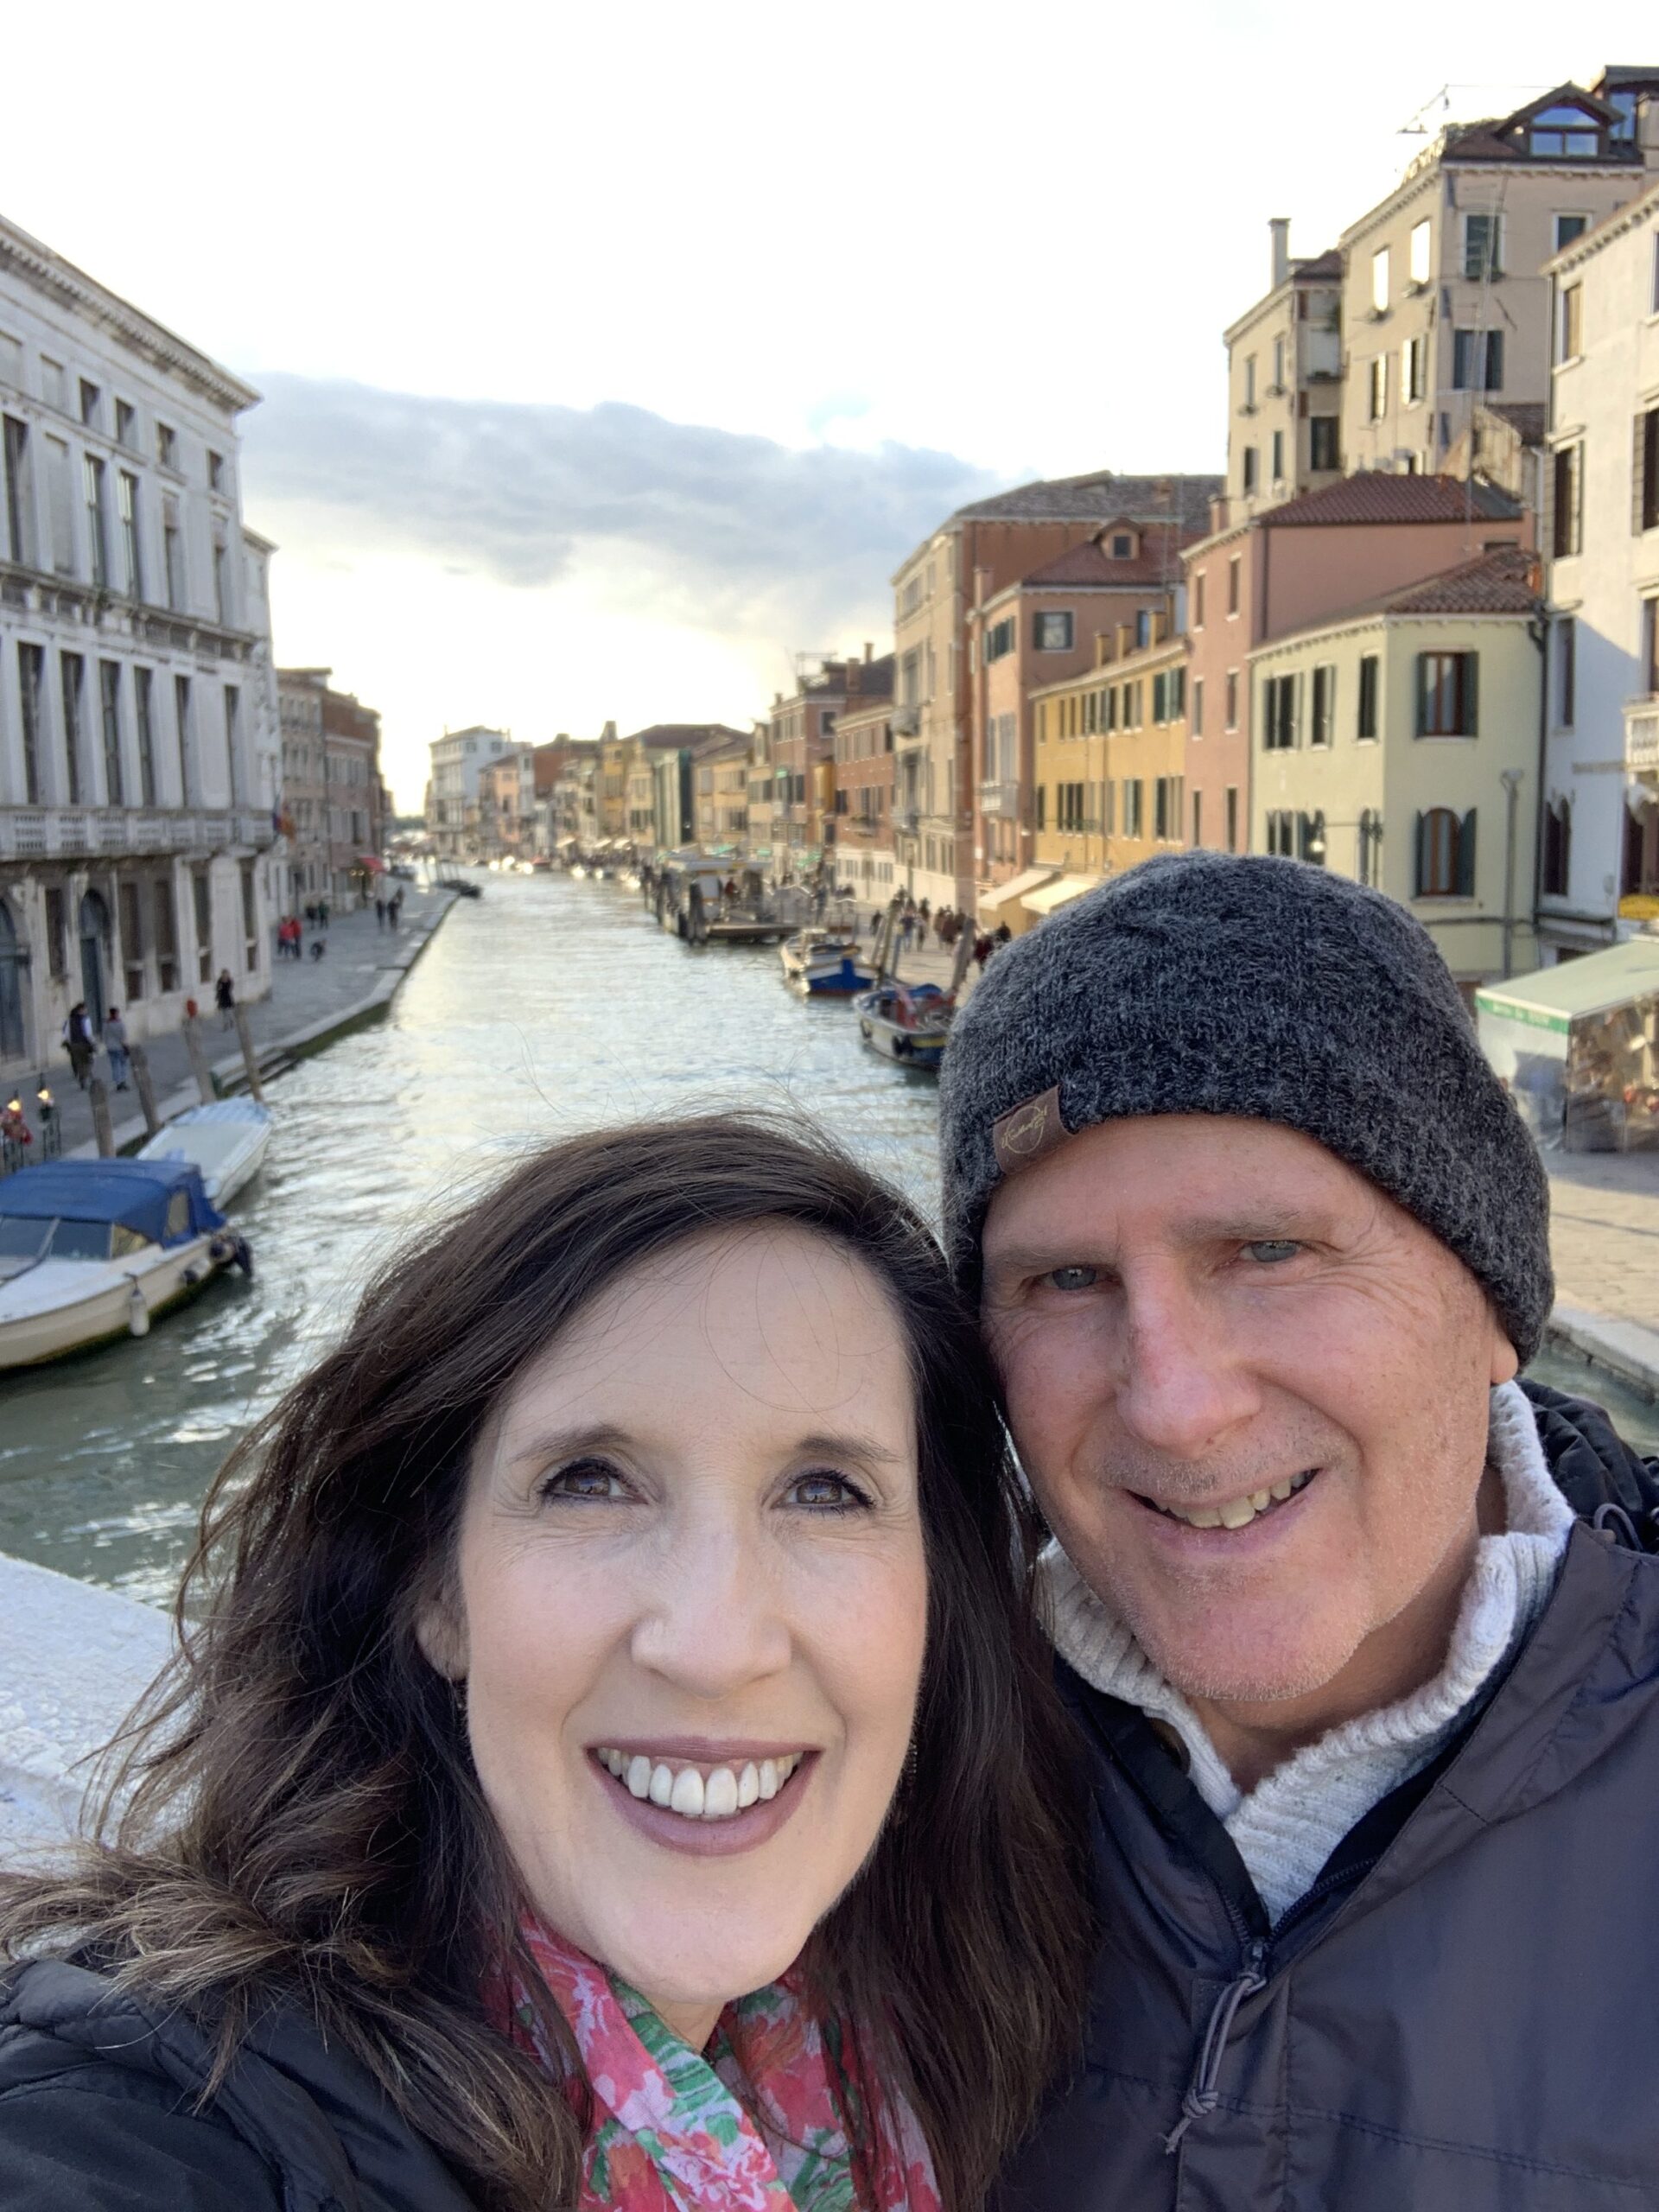 Venturing to romantic Venice